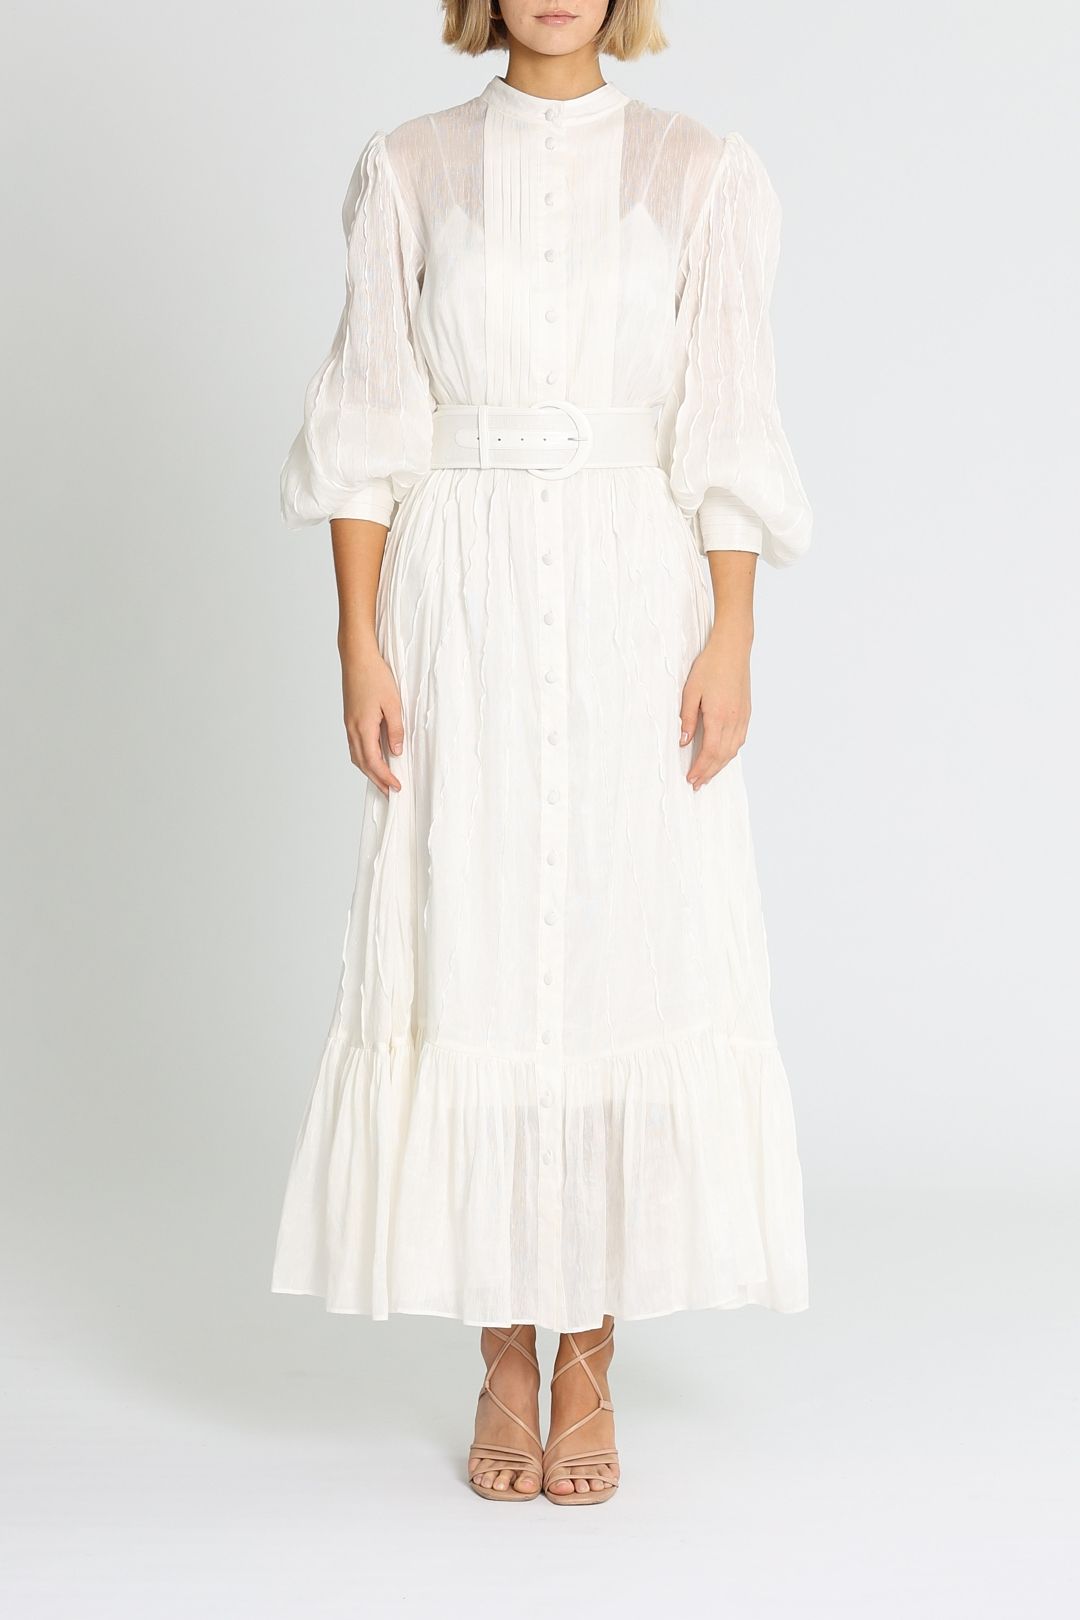 LEO LIN Cambridge Dress White Maxi